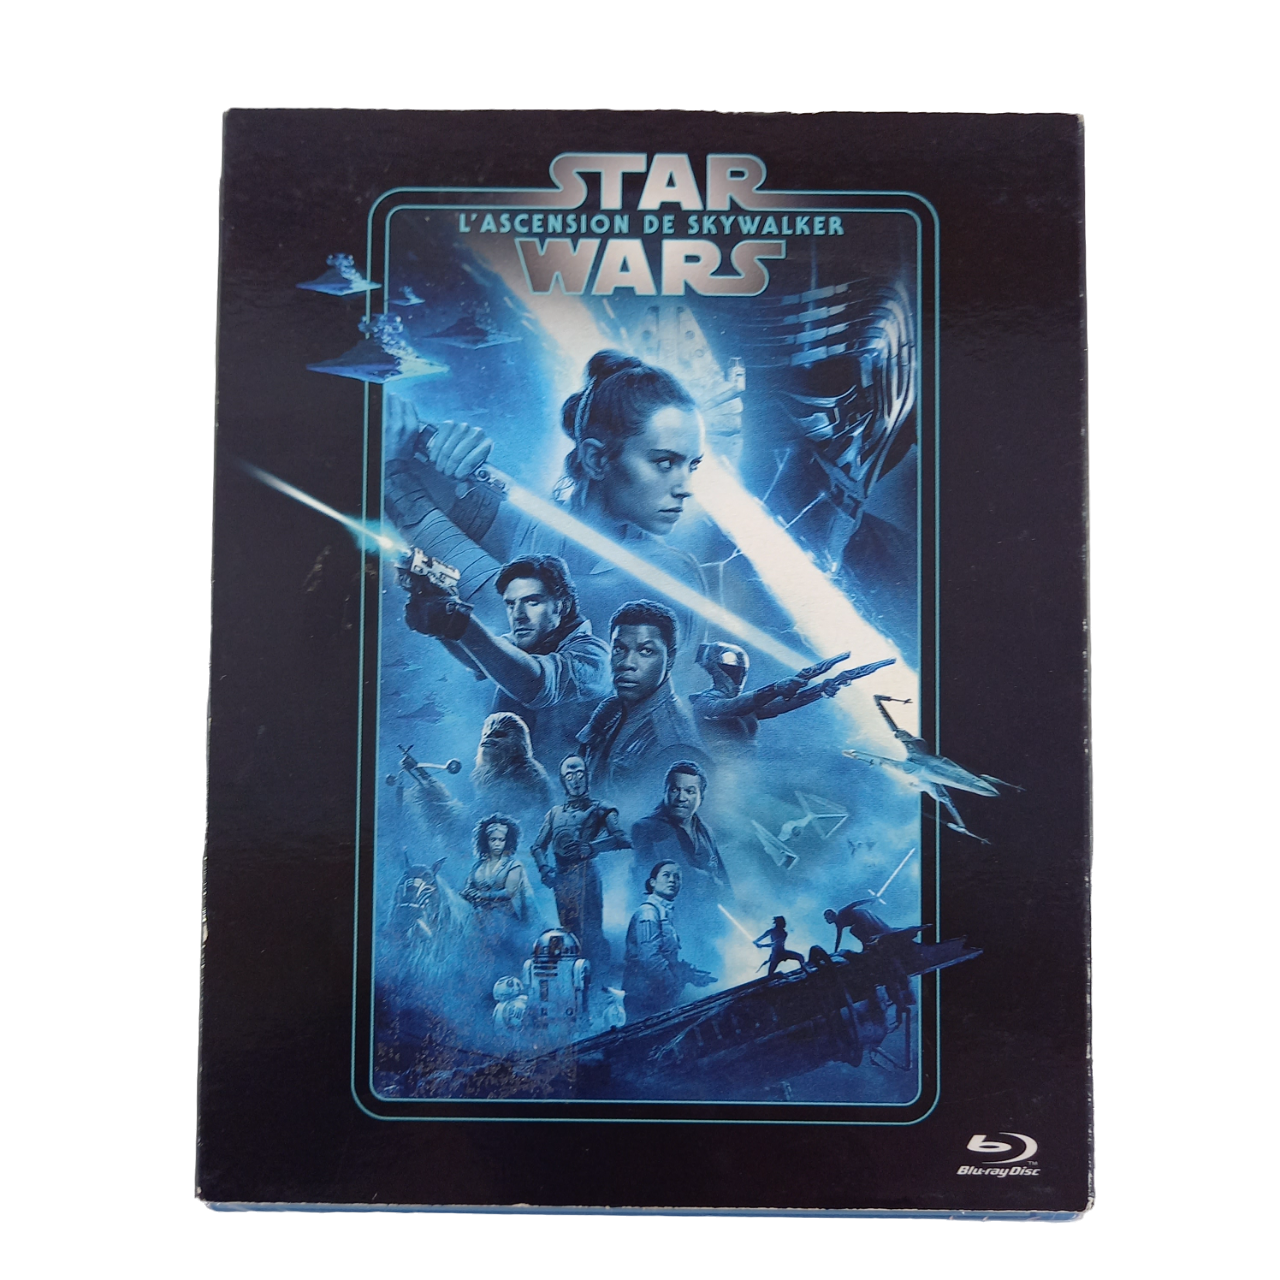 Star Wars - L'ascension de Skywalker - Blu-ray